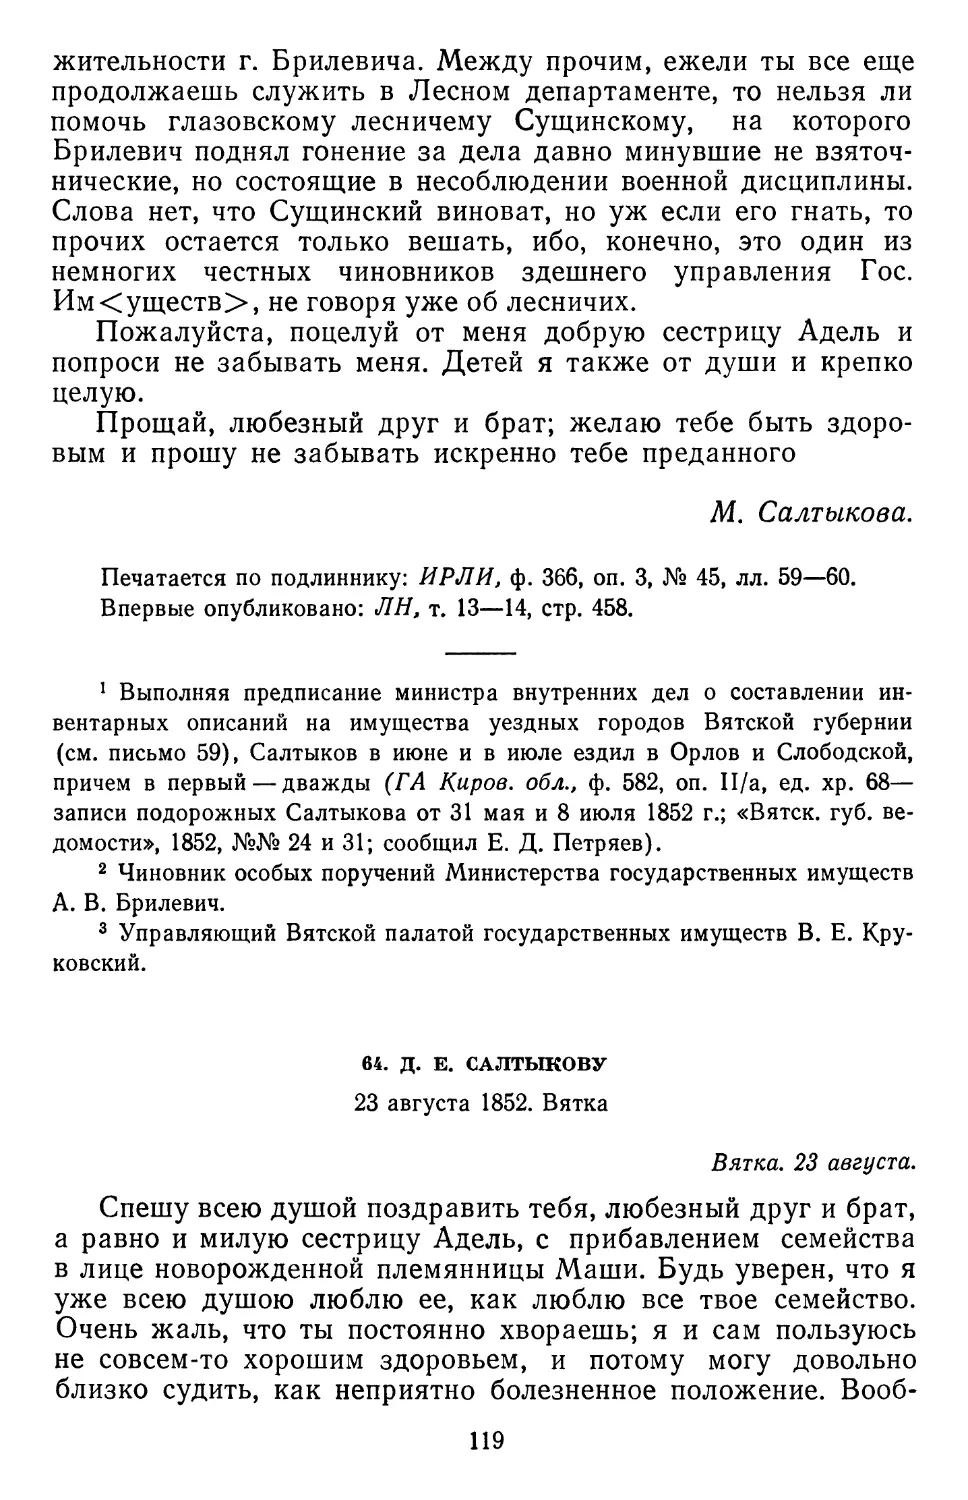 64.Д.Е. Салтыкову. 23 августа1852. Вятка